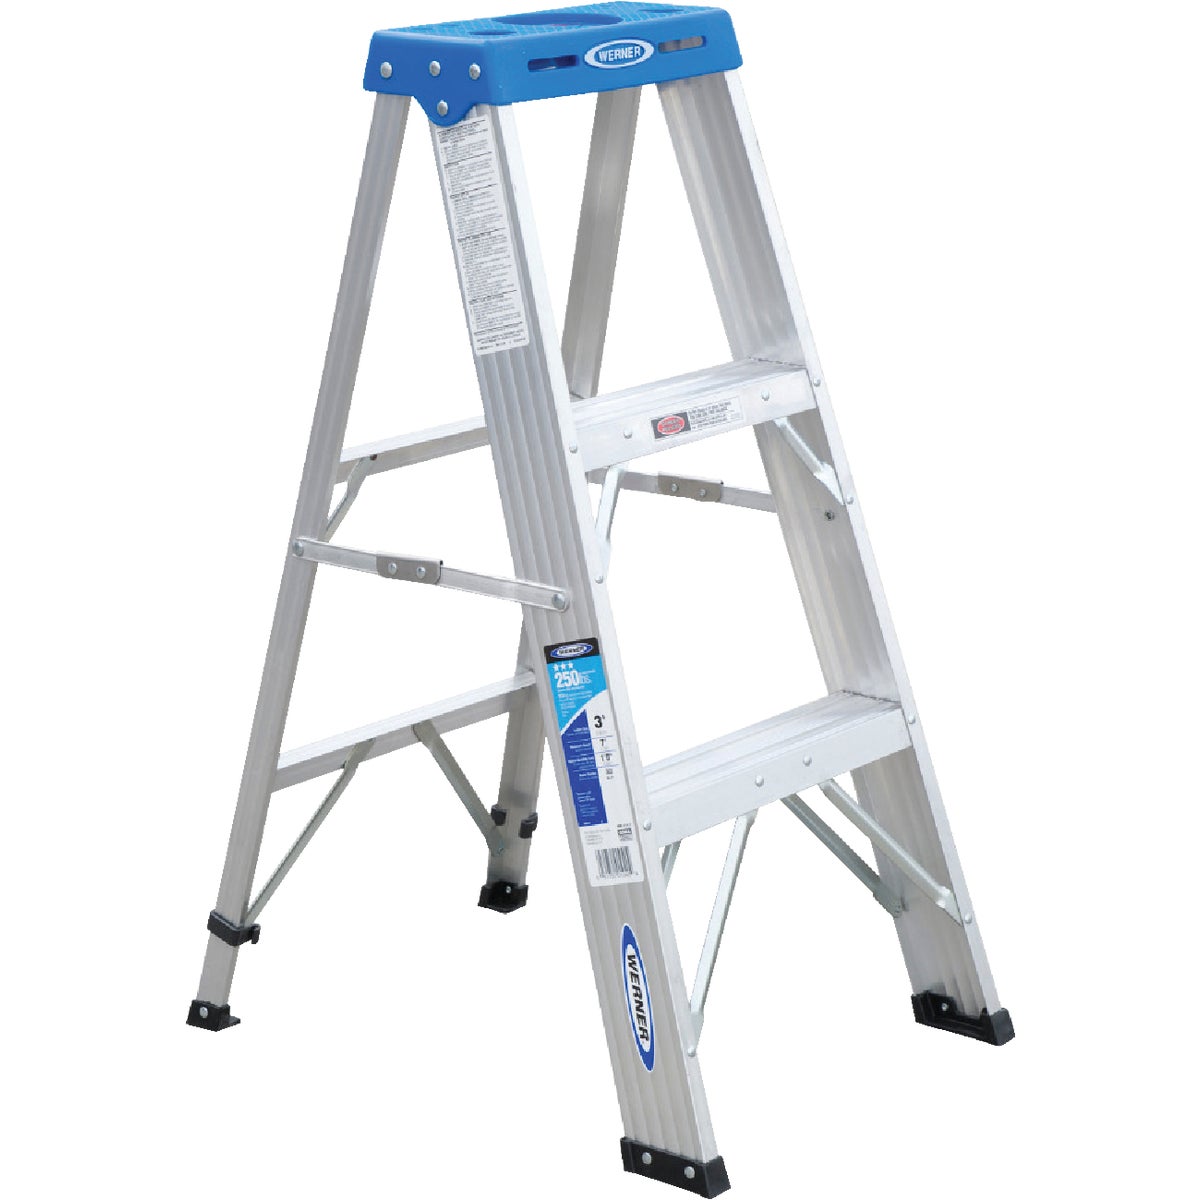 Item 782555, Step ladder for household or light commercial use.